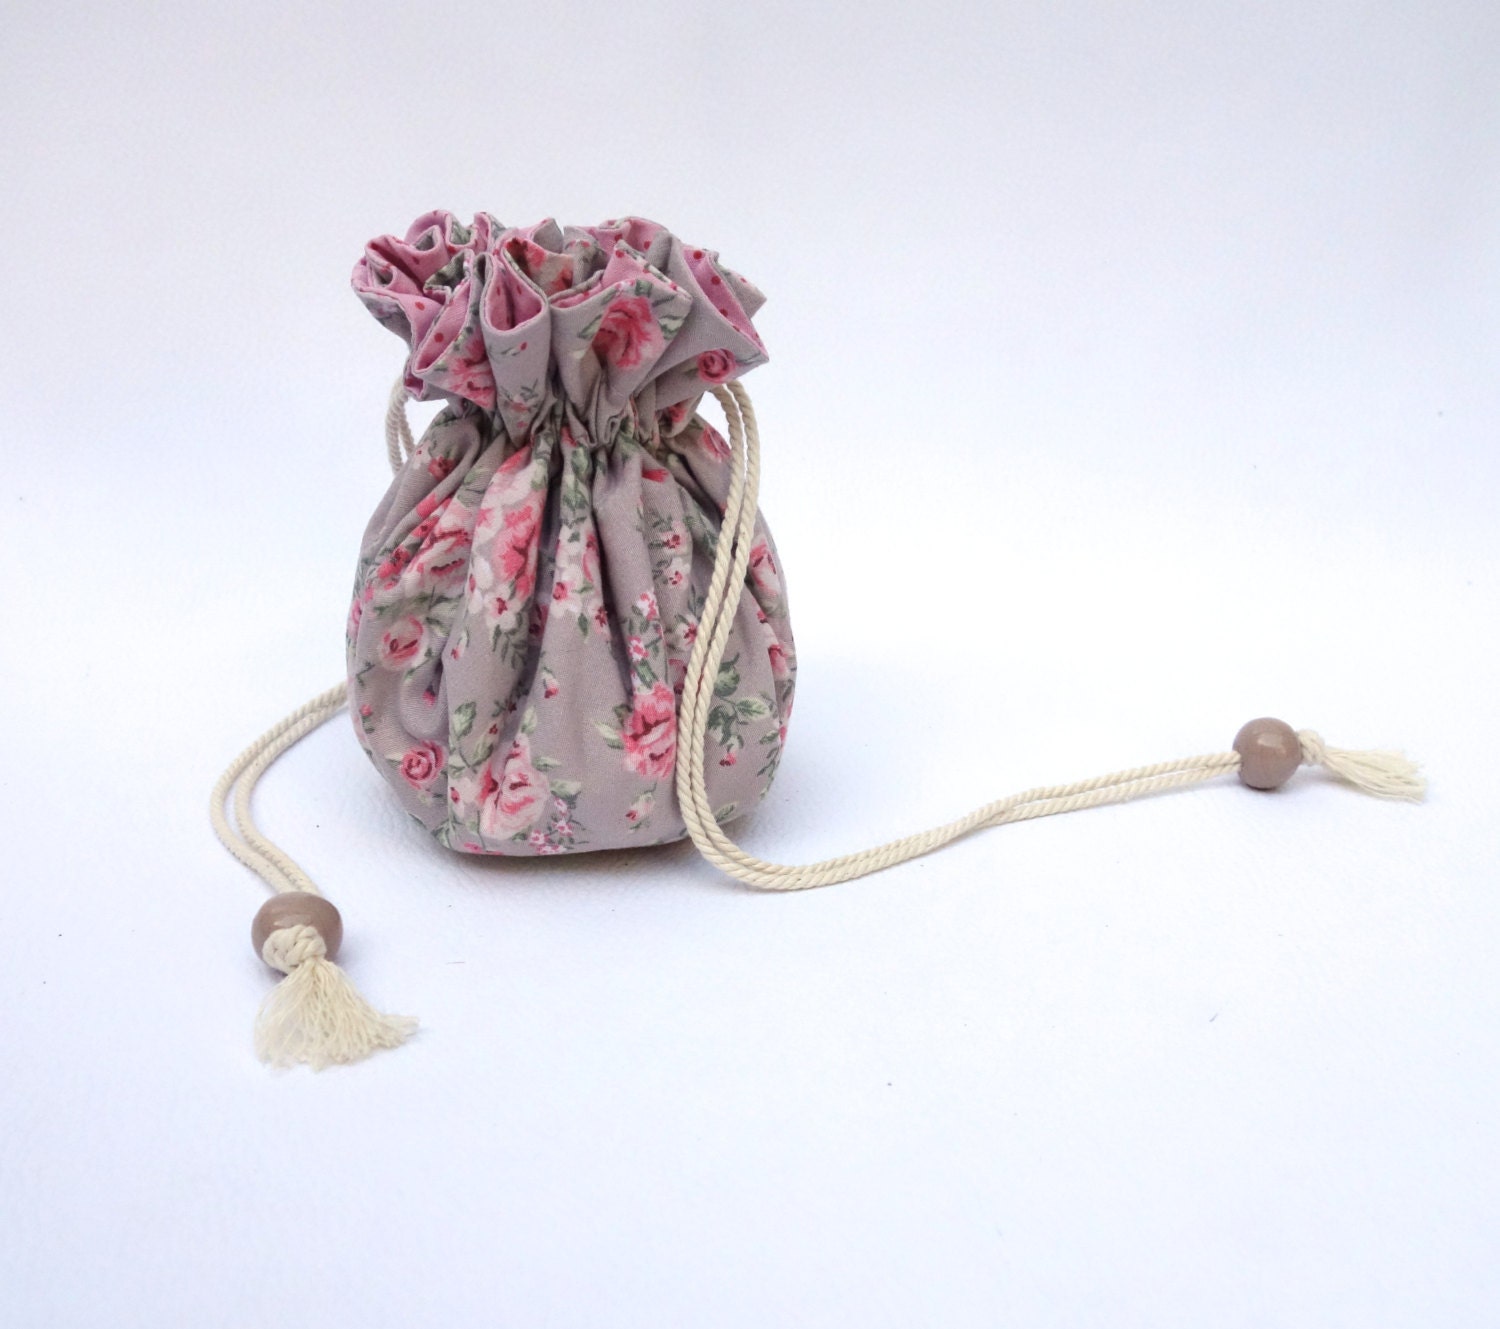 Jewelry drawstring bag / Travel jewelry pouch / by Sakamaliss